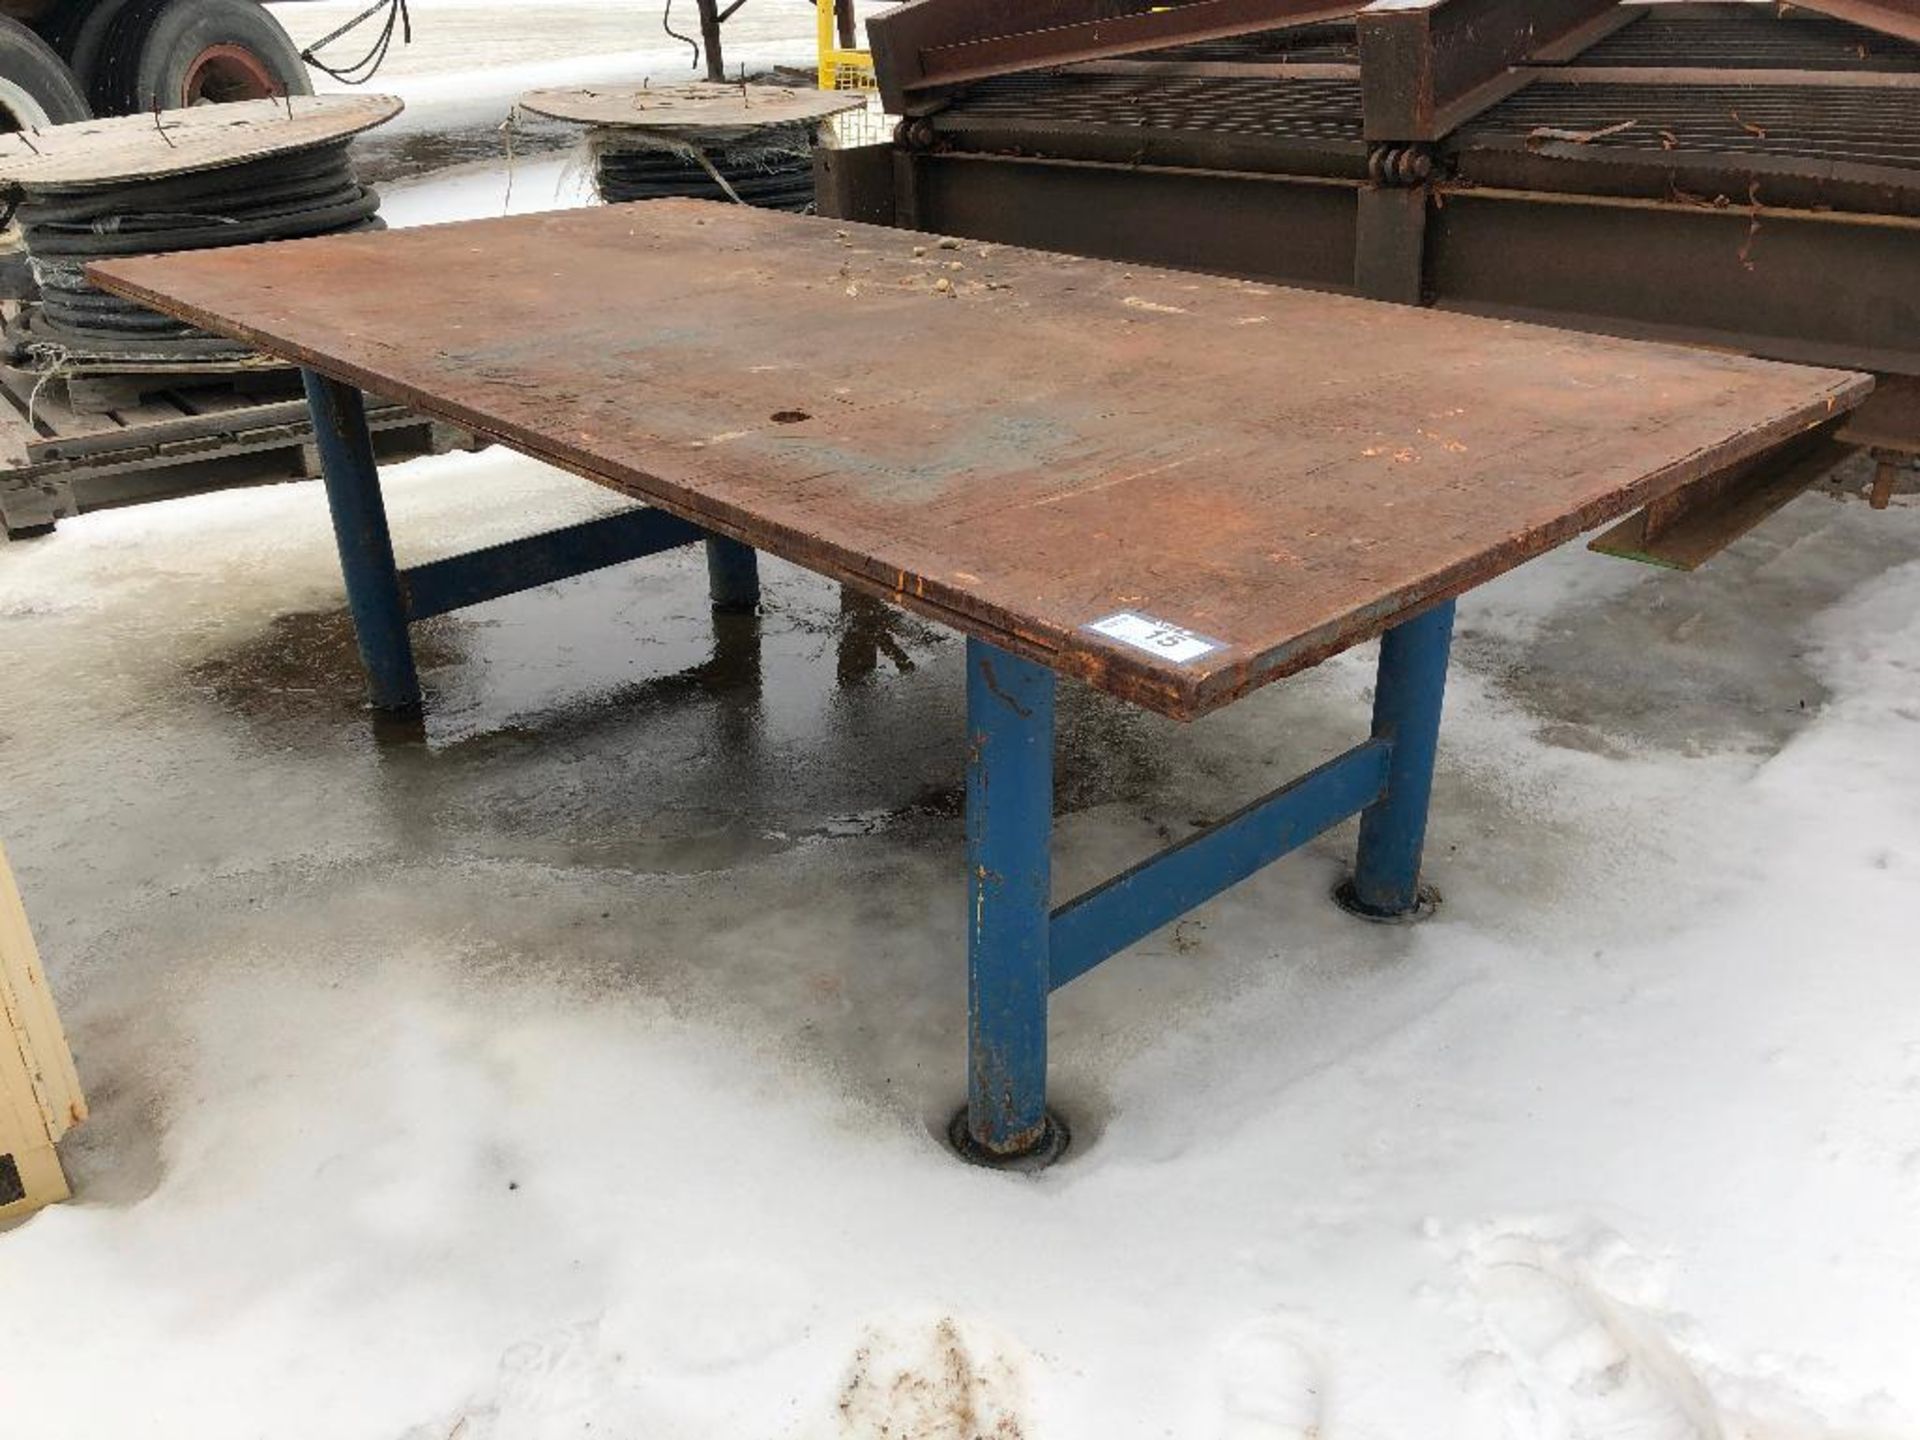 8’ X 4’ Steel Welding Table